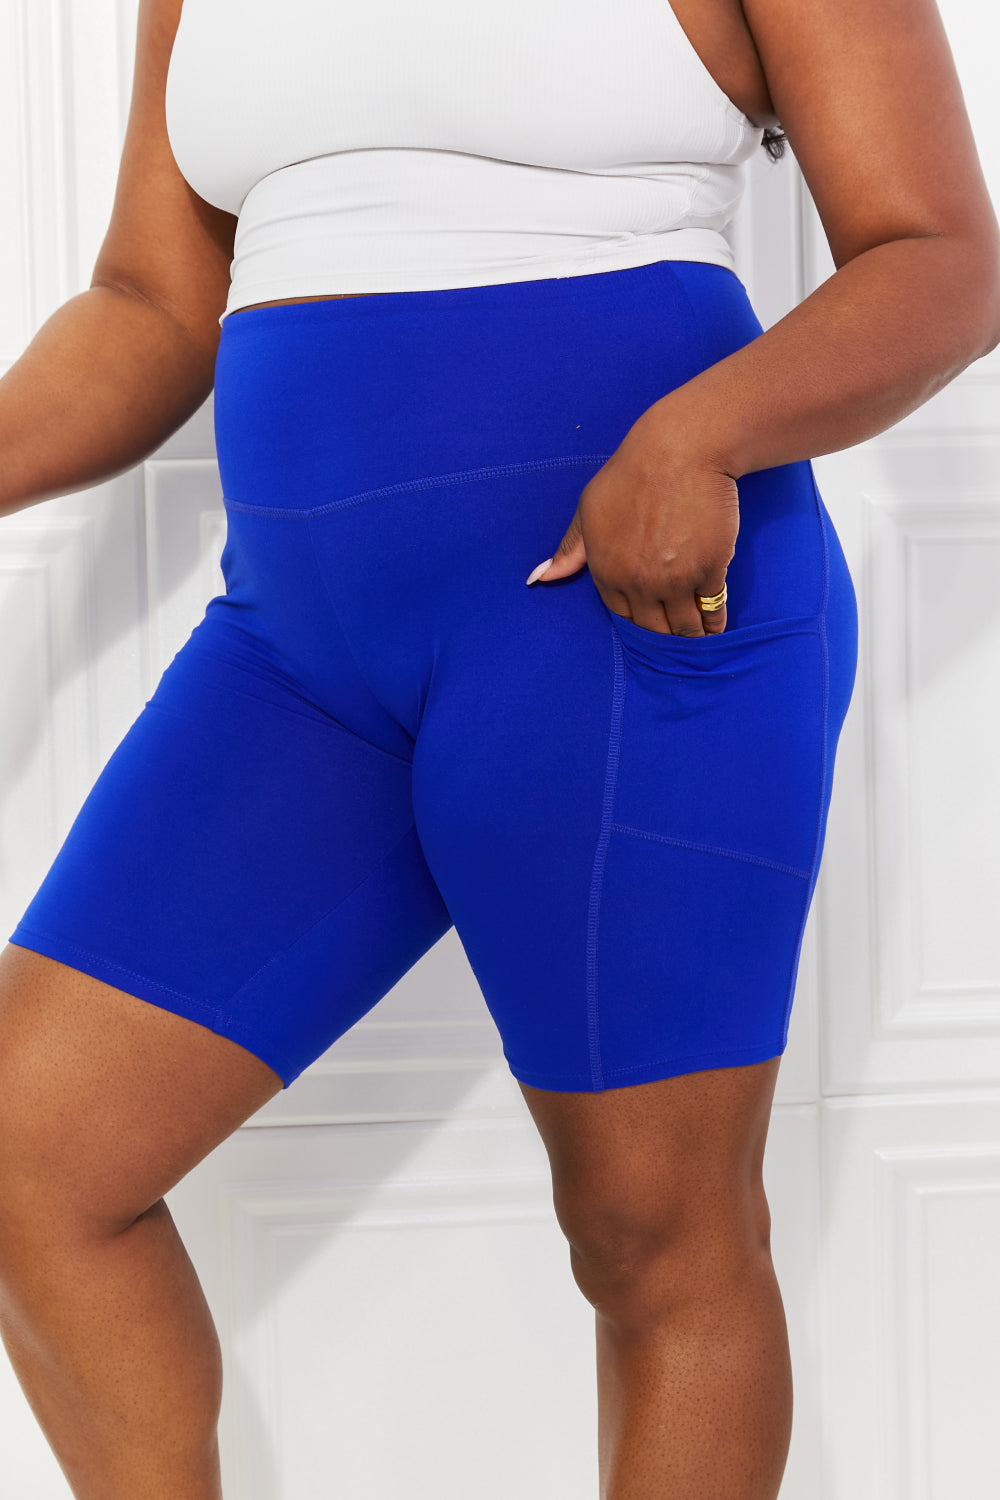 Blue Brushed Biker Shorts - Regular and Plus Size